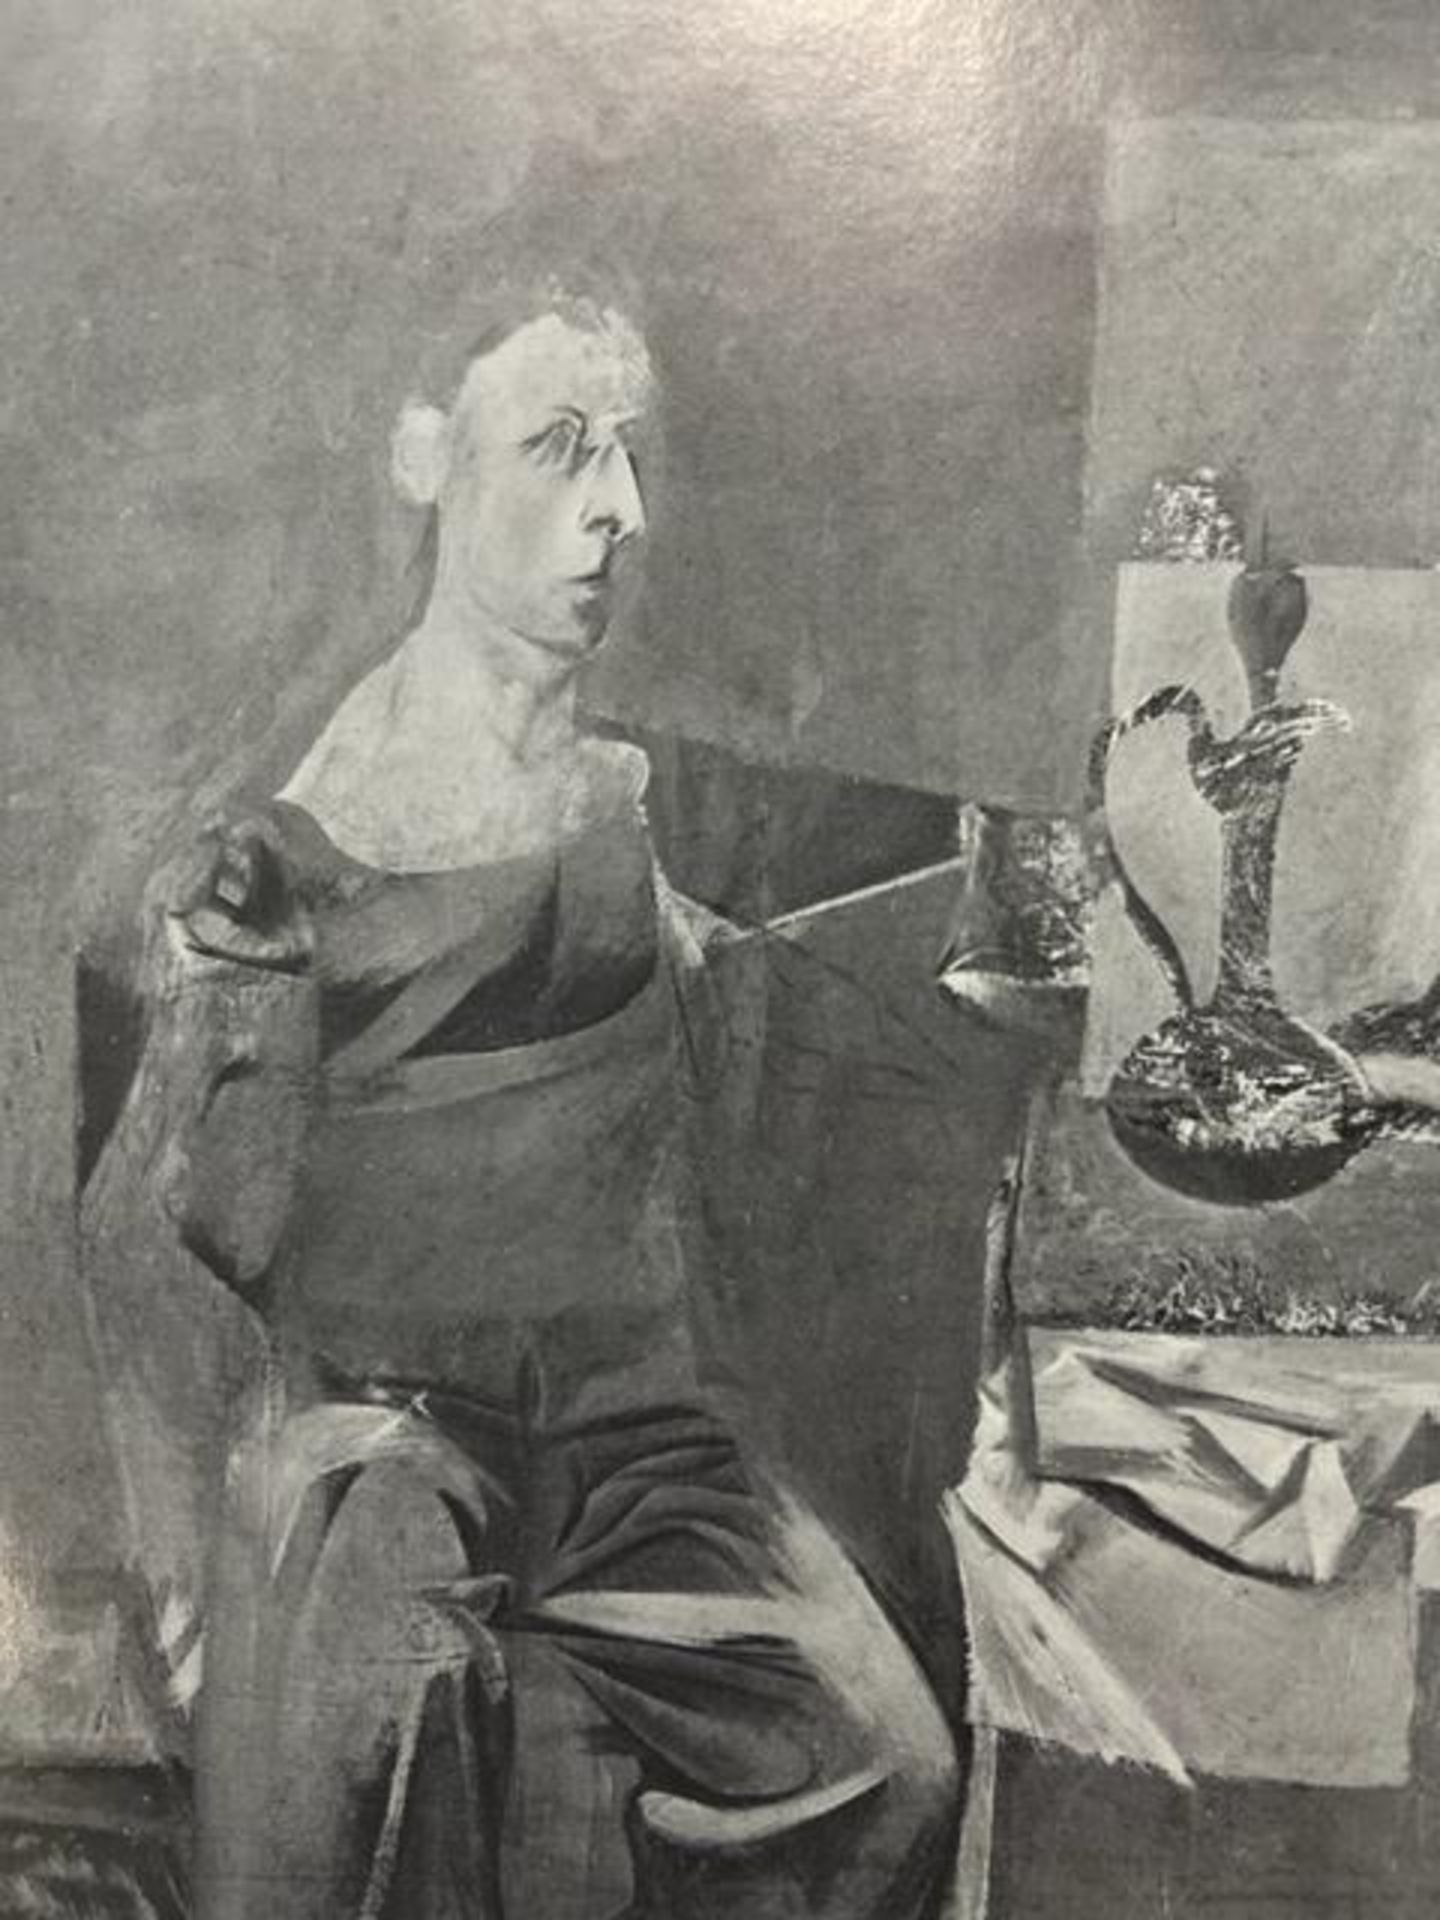 Willem de Kooning "Glazier" Print. - Bild 4 aus 6